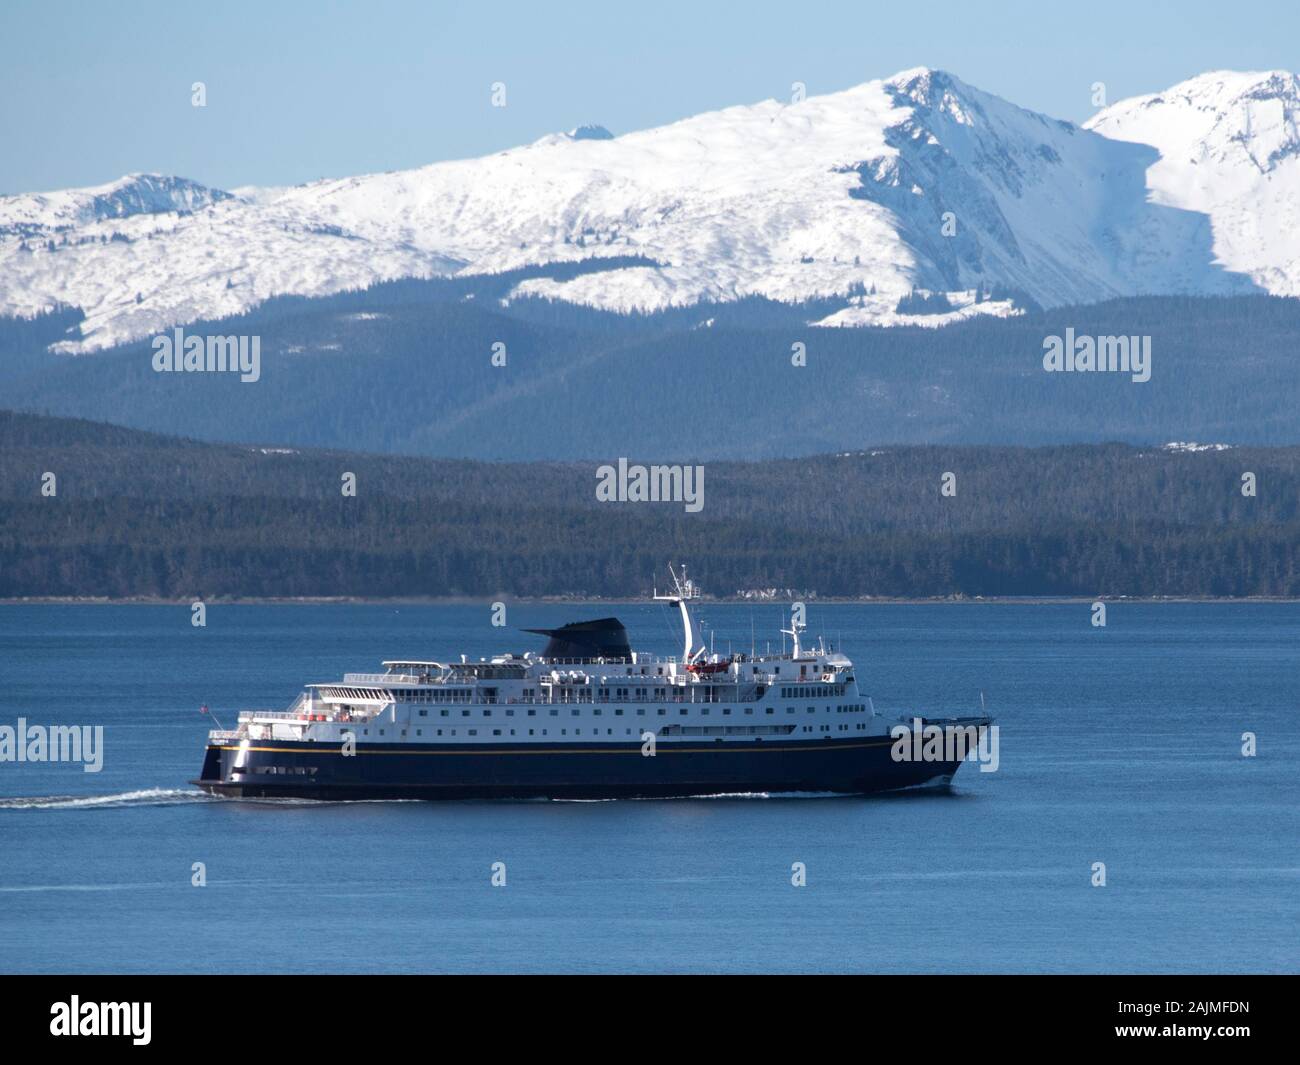 The Alaska Marine Highway System ferry - m/v Columbia Stock Photo